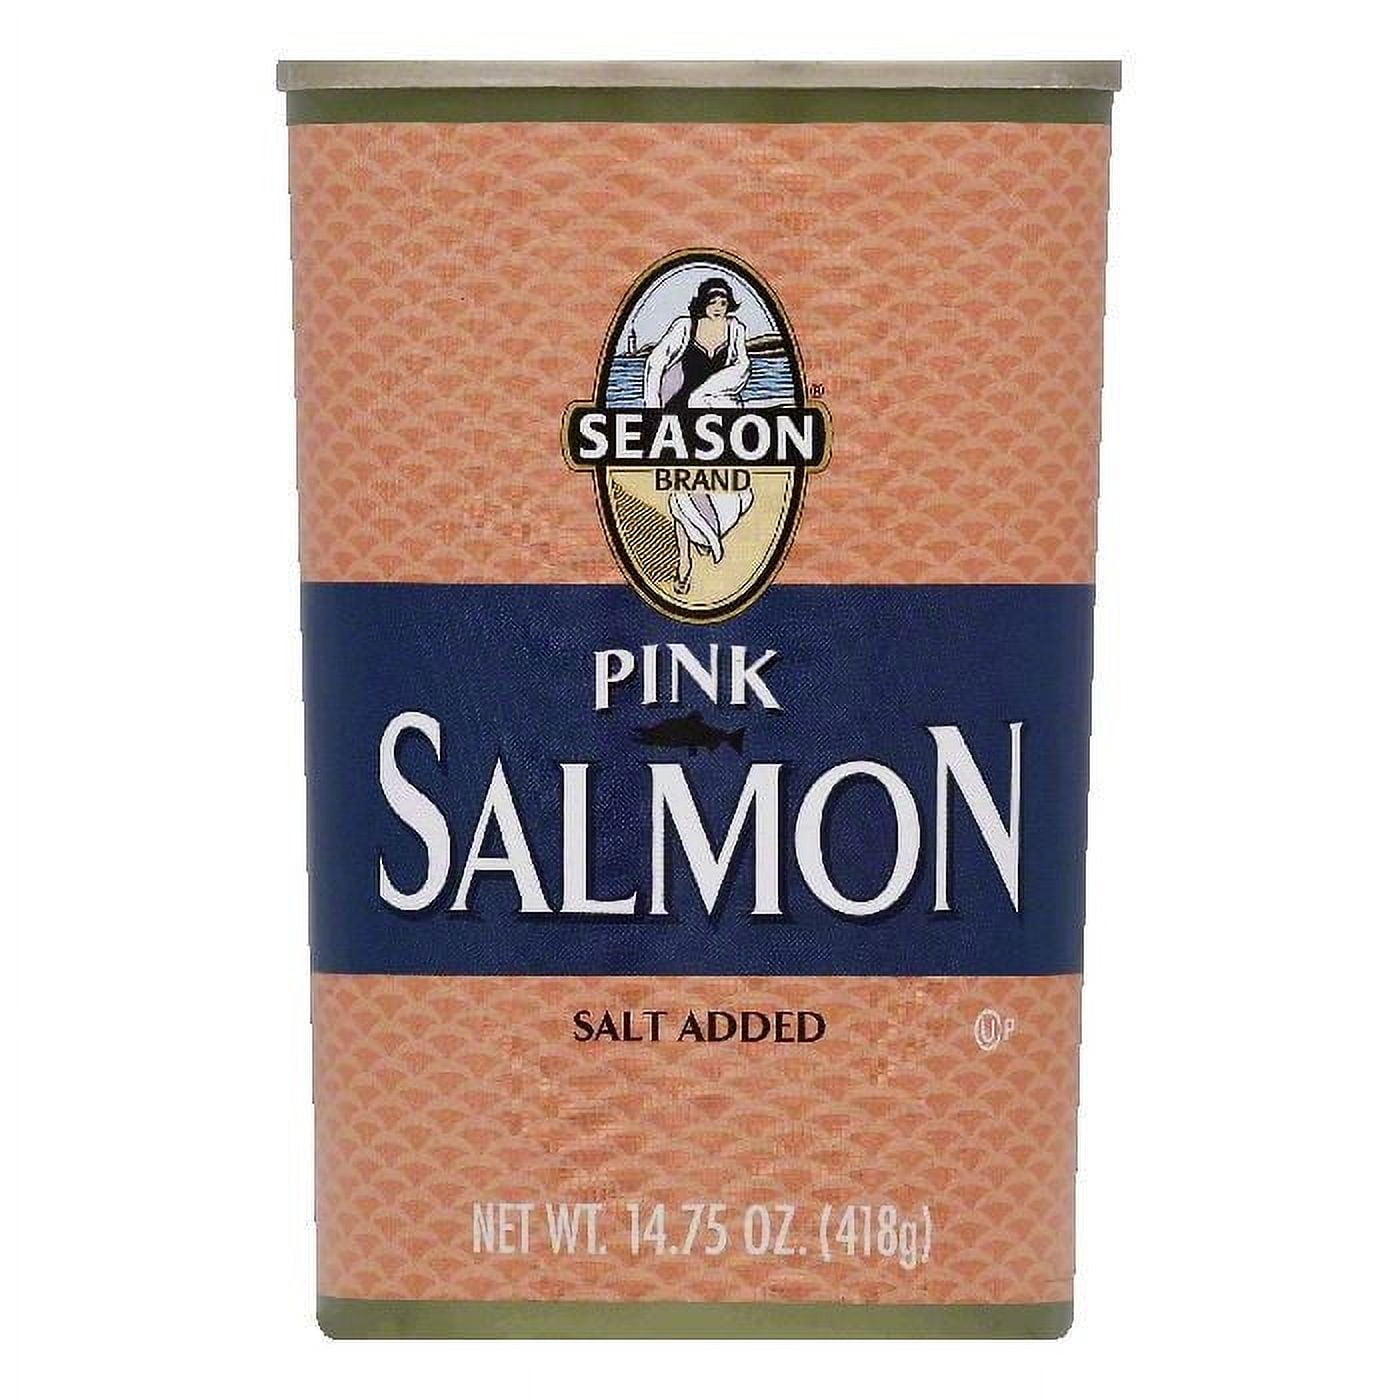 Season Brand Alaskan Pink Salmon with Salt Added, 14.75 oz Can